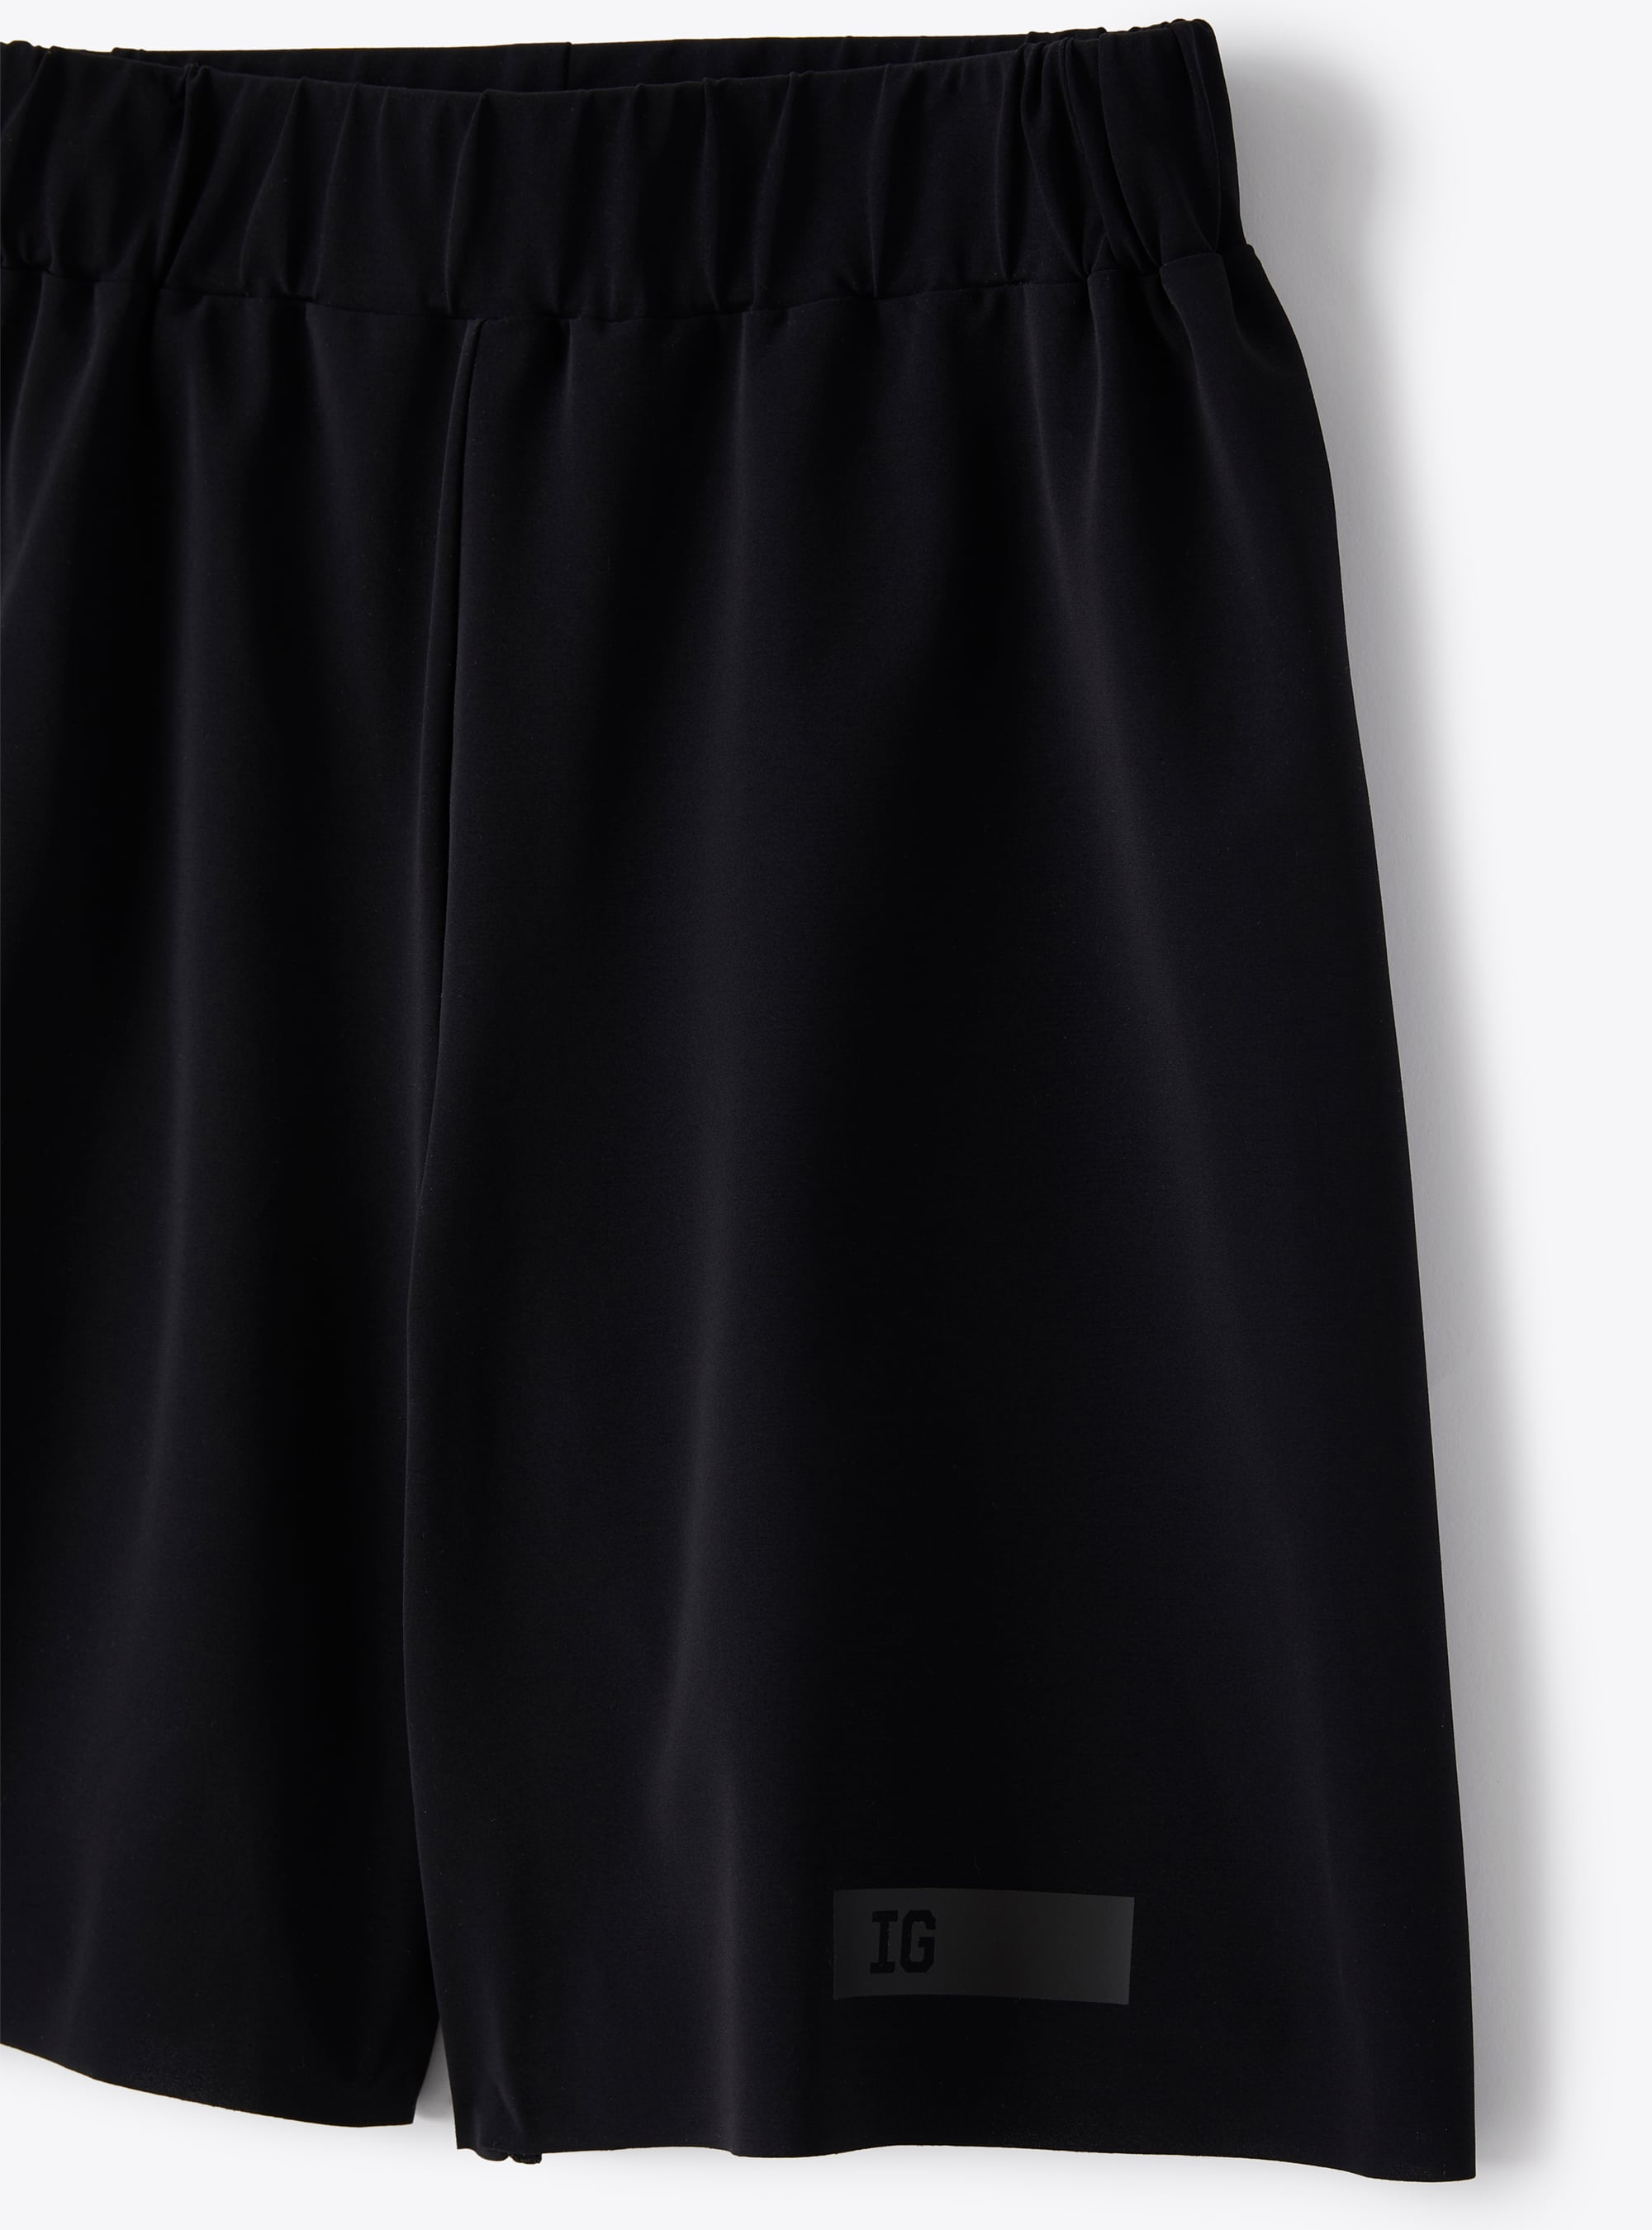 Bermuda shorts in black Sensitive® Fabrics material - Black | Il Gufo